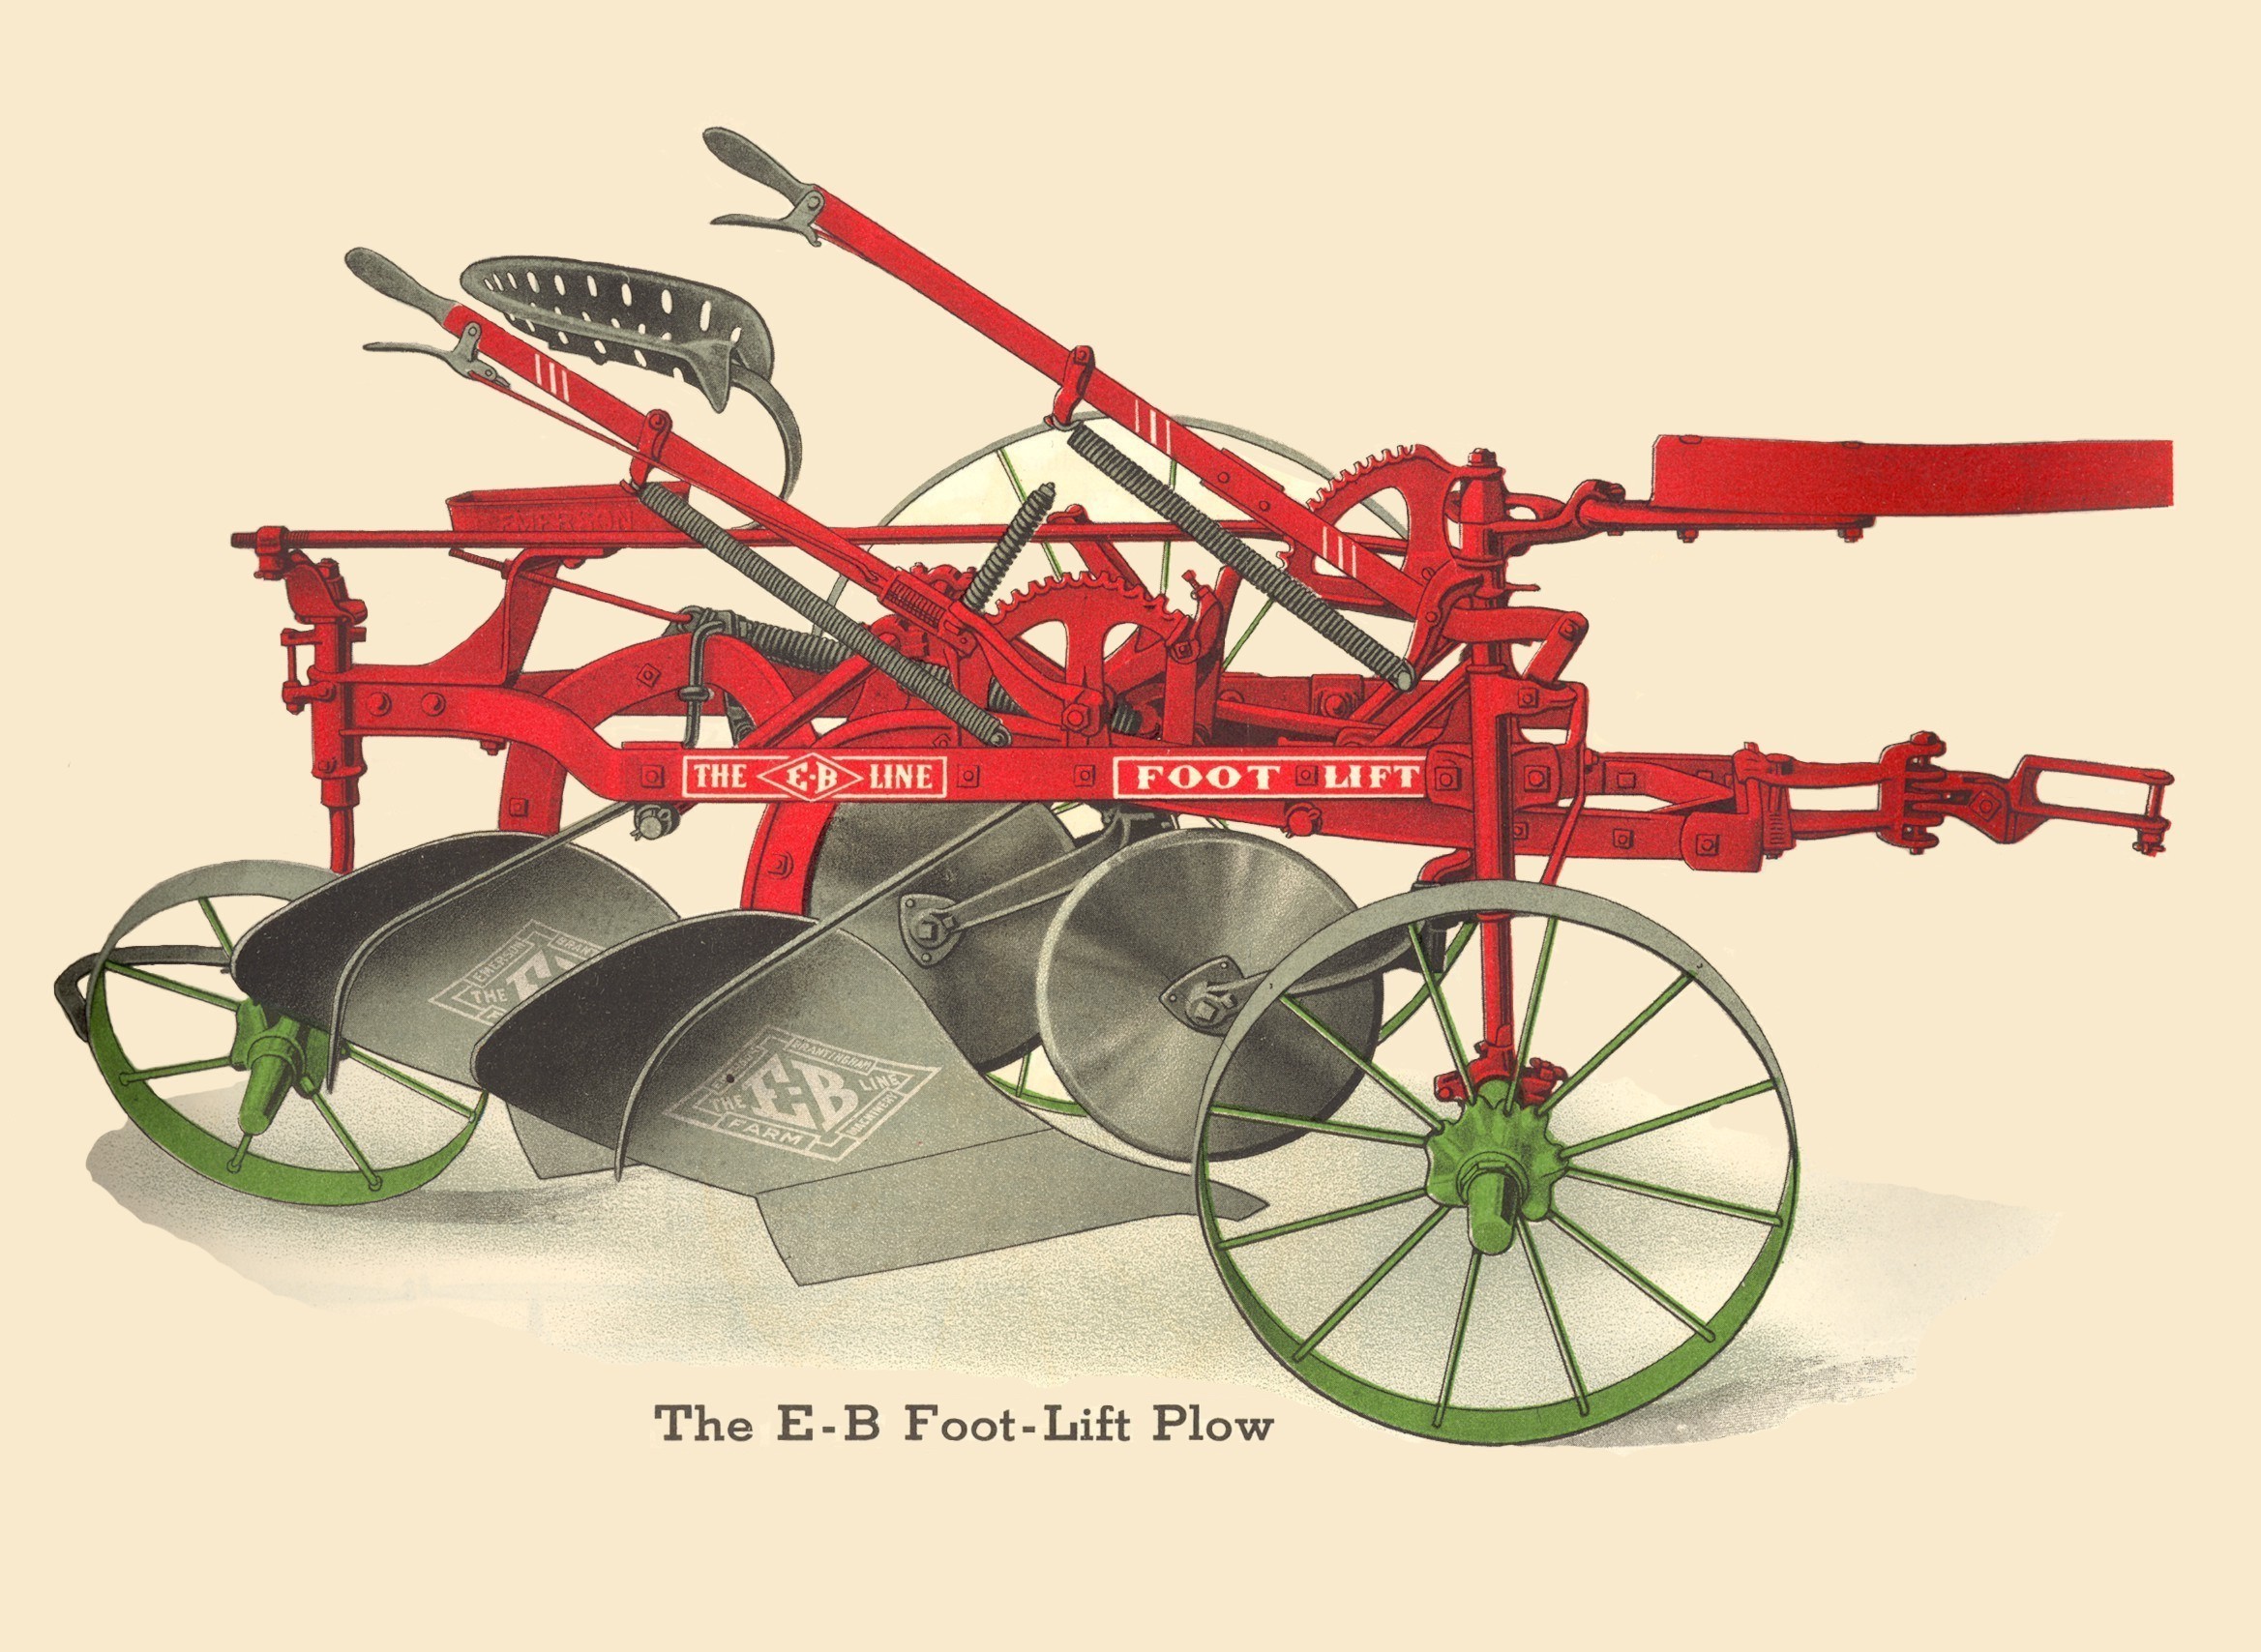 1897 Agriculture Tools, Sowing Machine, Original Antique Print, Farming  Equipment, French Antique Illustration 